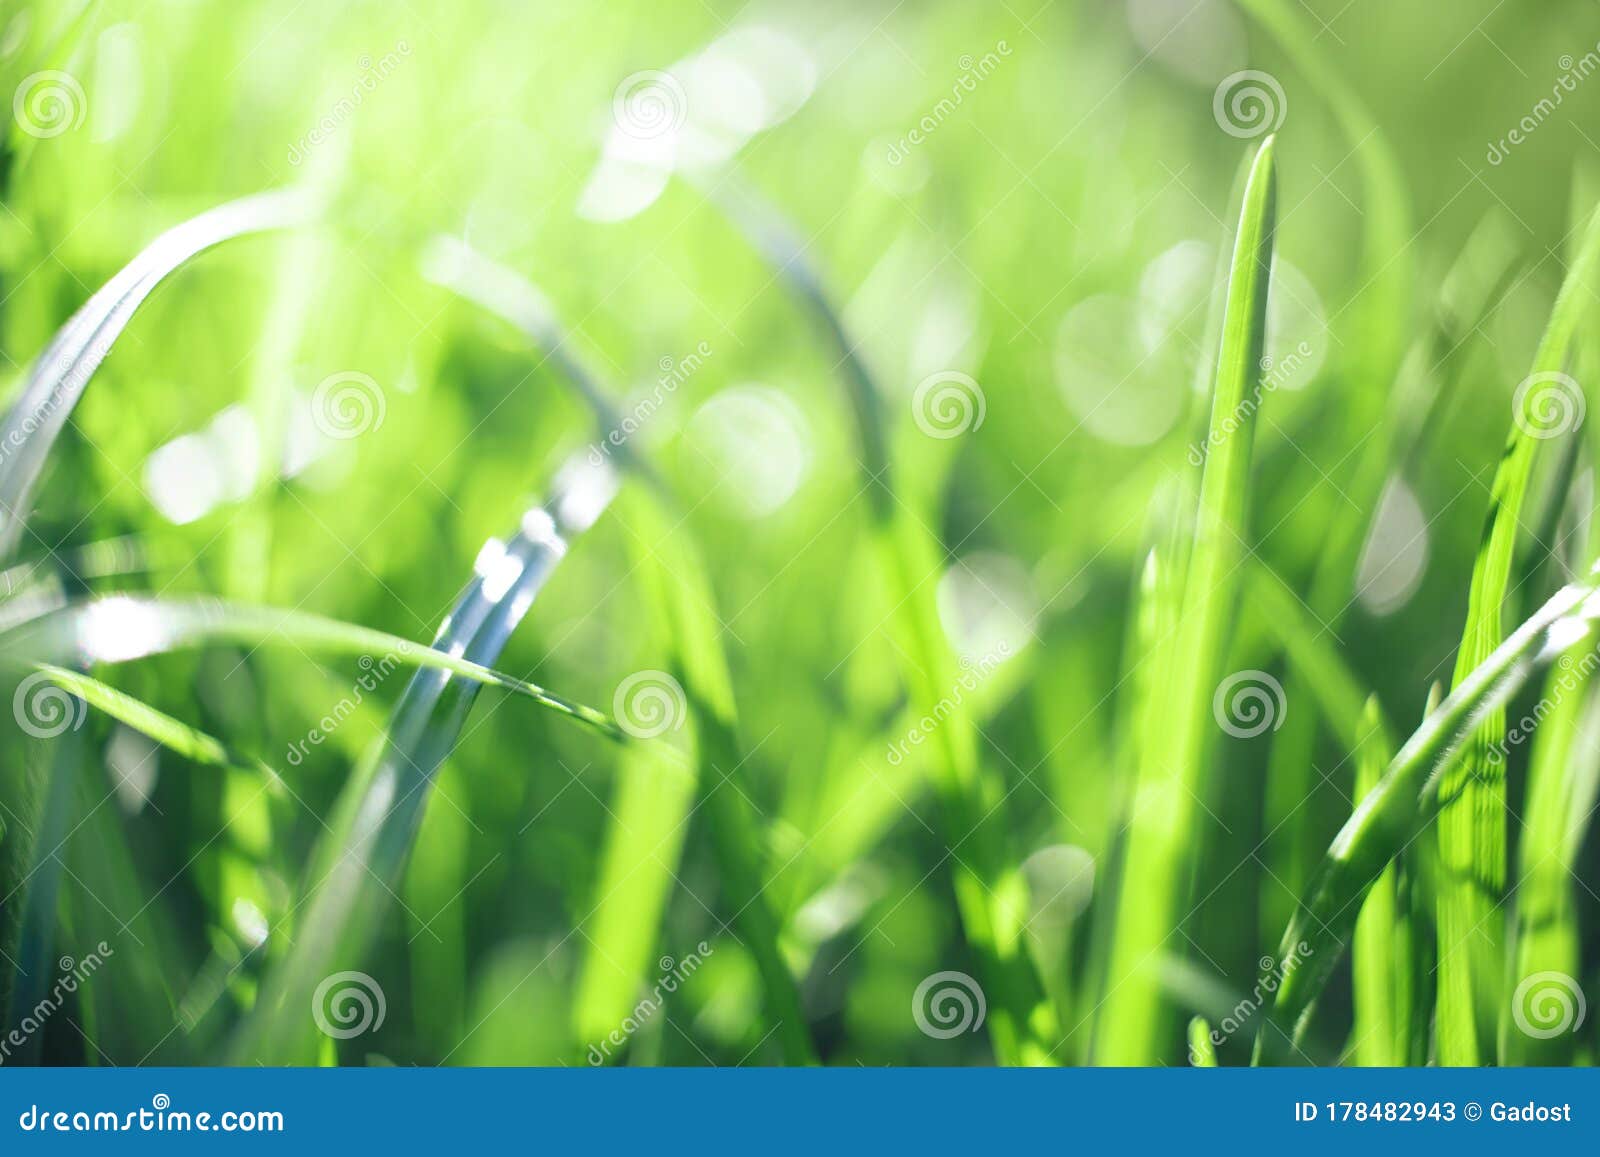 Closeup of Fresh Green Grass for Wallpaper Design Stock Image - Image